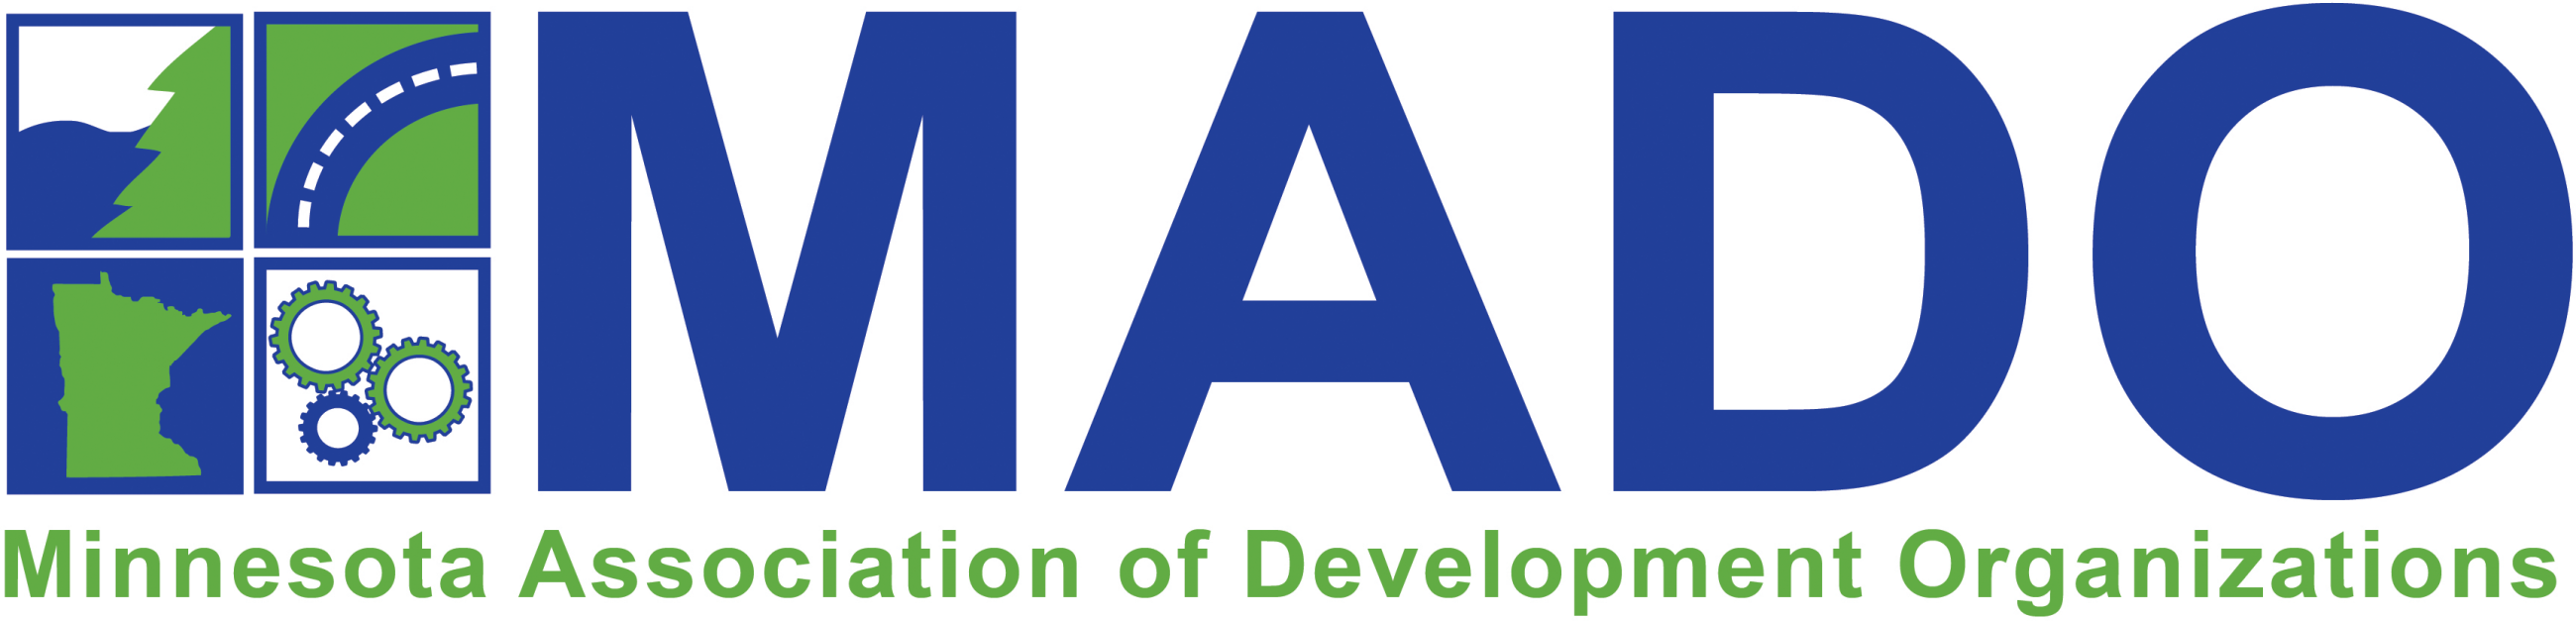 Minnesota Association of Development Organizations's Logo